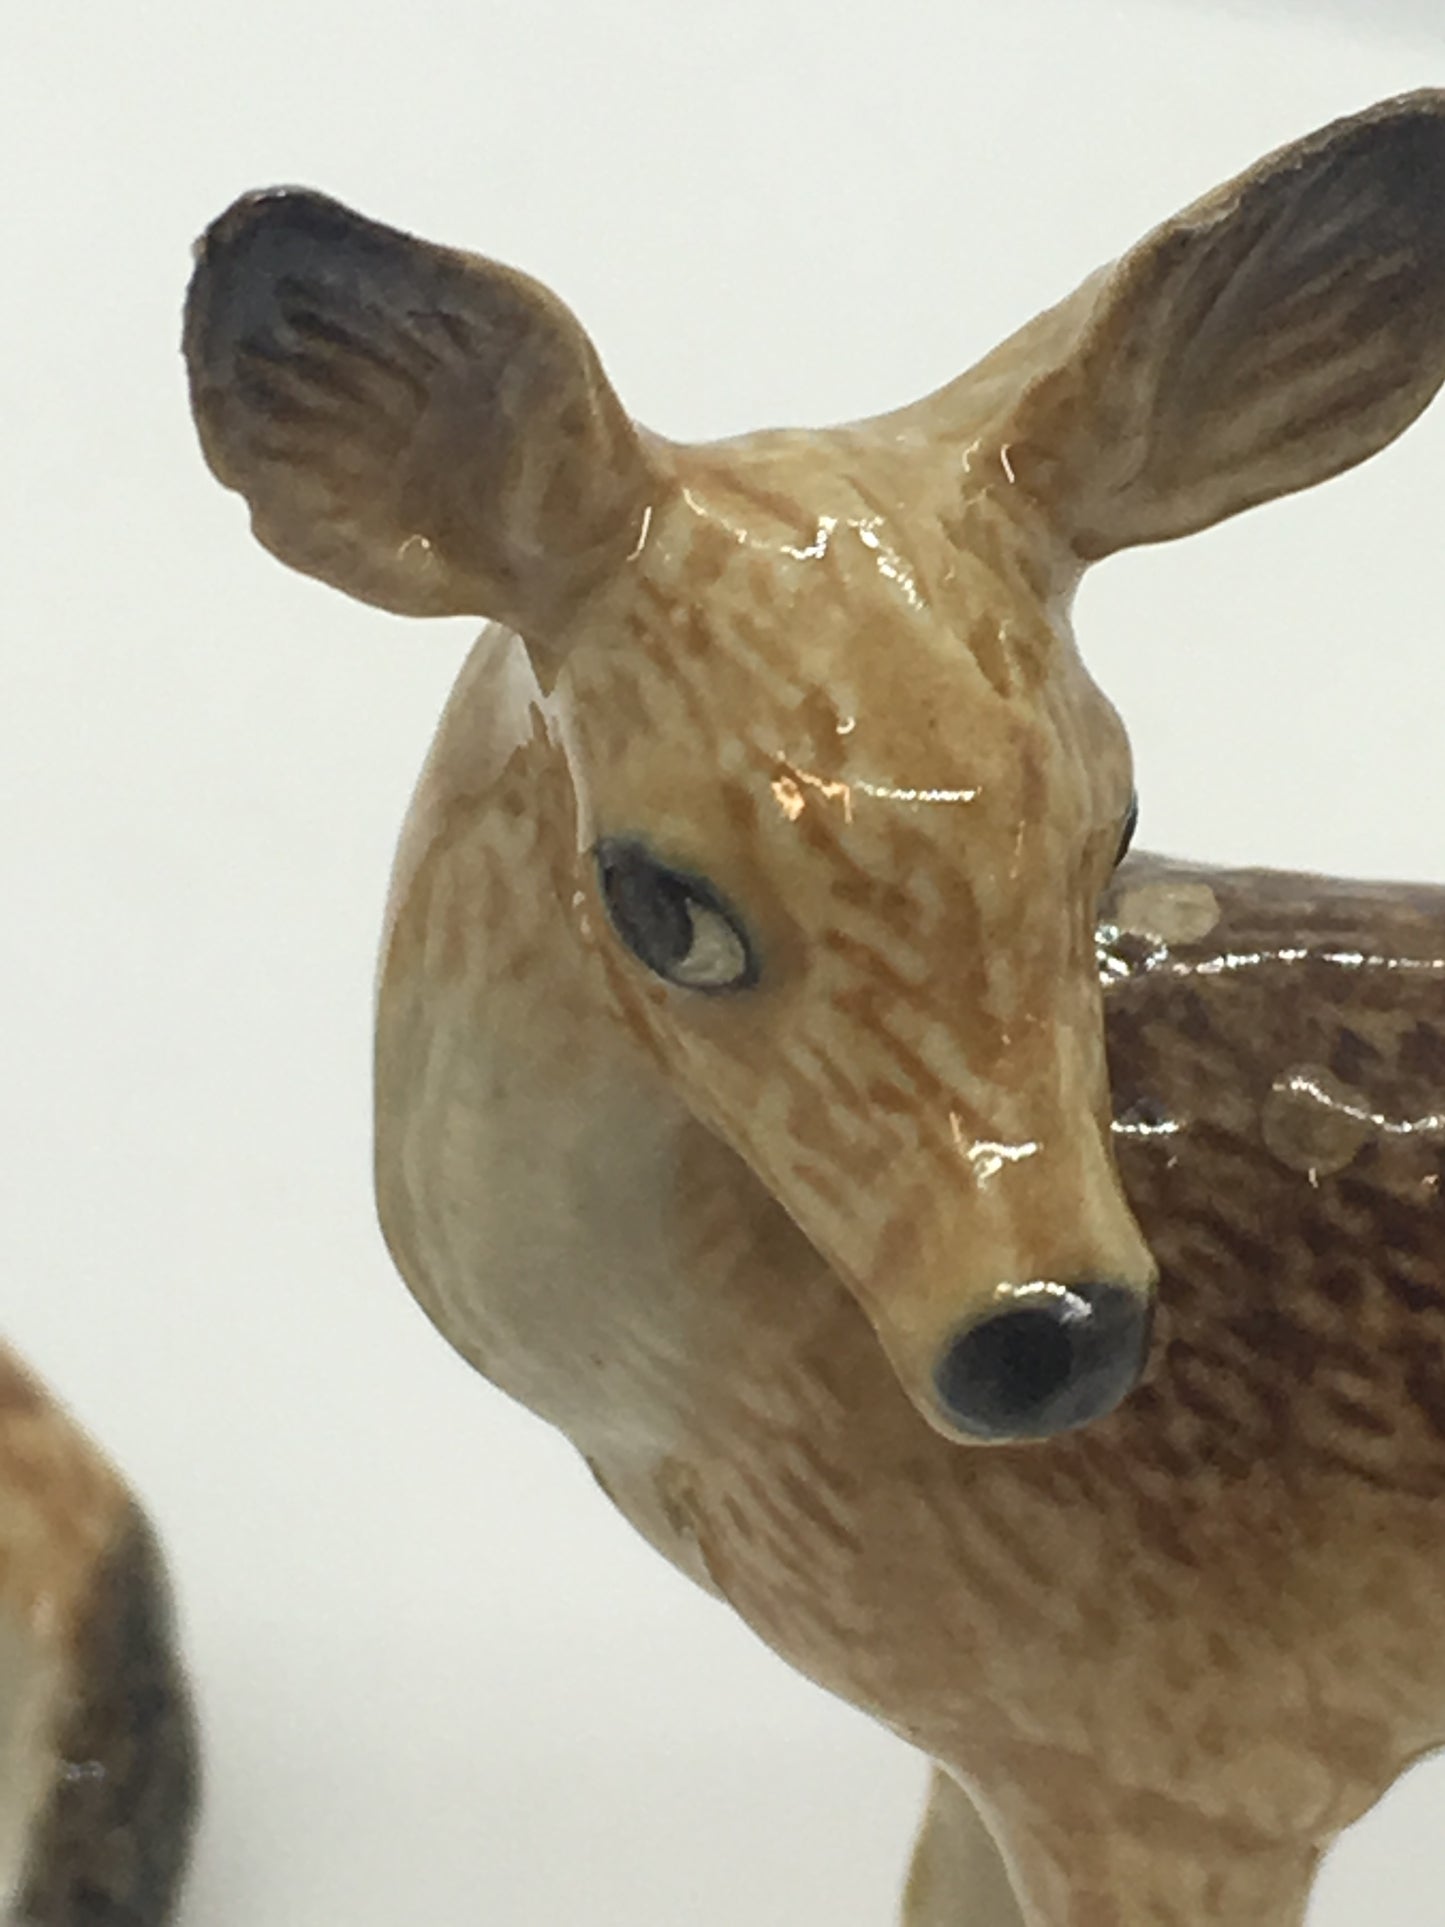 White Tail Deers Miniature Porcelain Figurines (2Pcs)